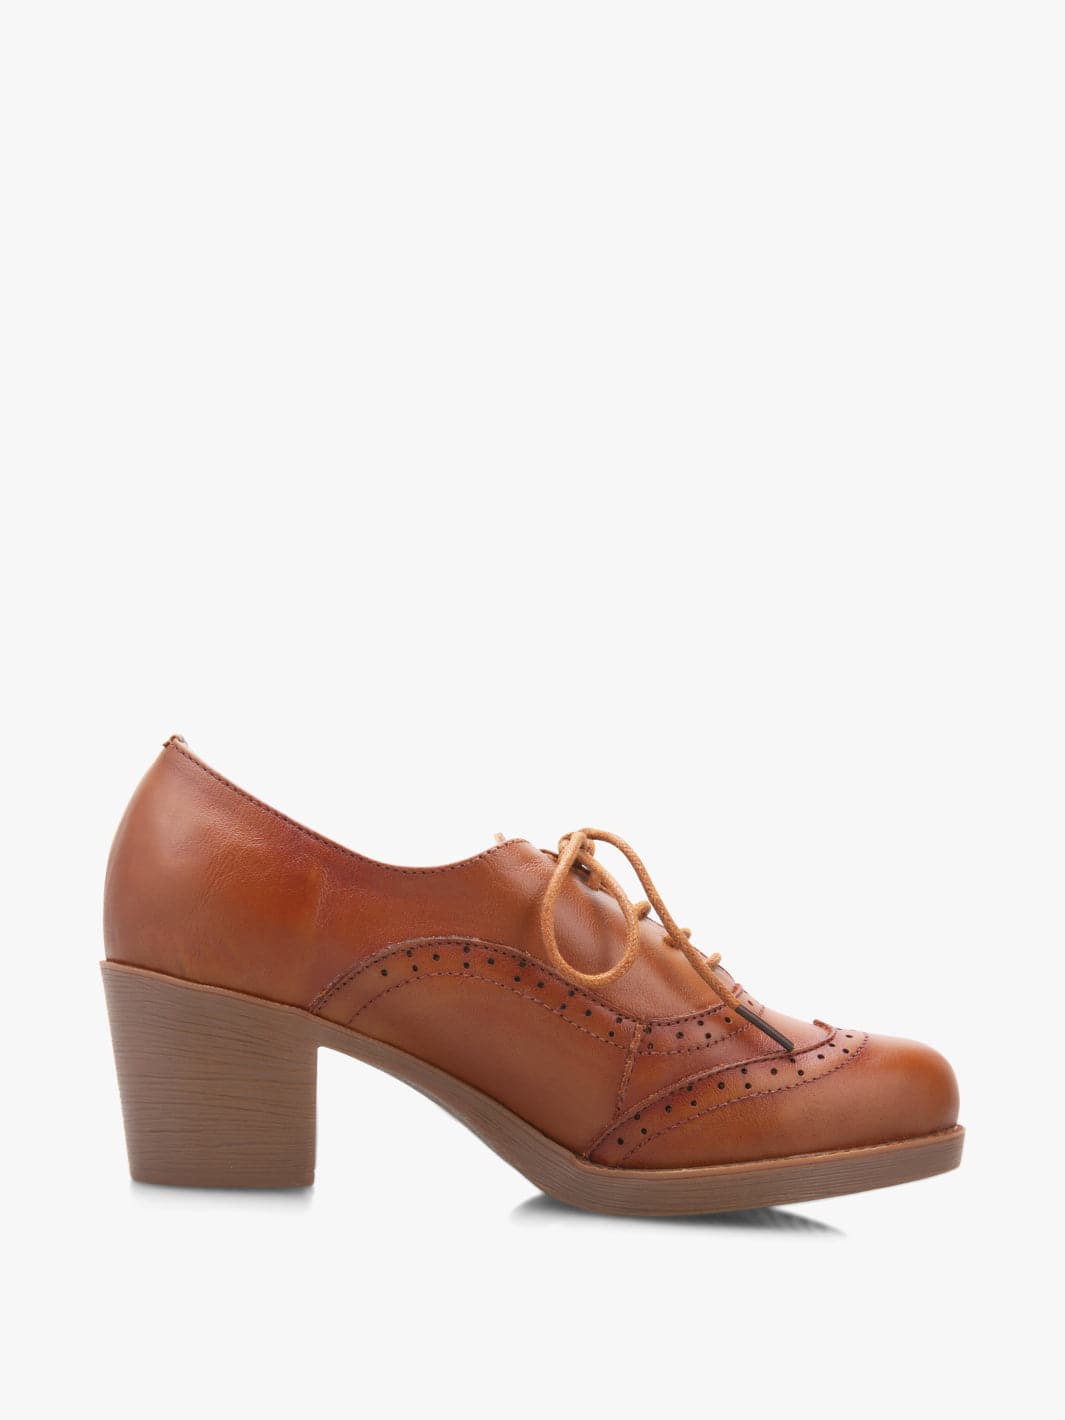 Dbeck® RetroTrail: Leather Vintage Women's Shoes